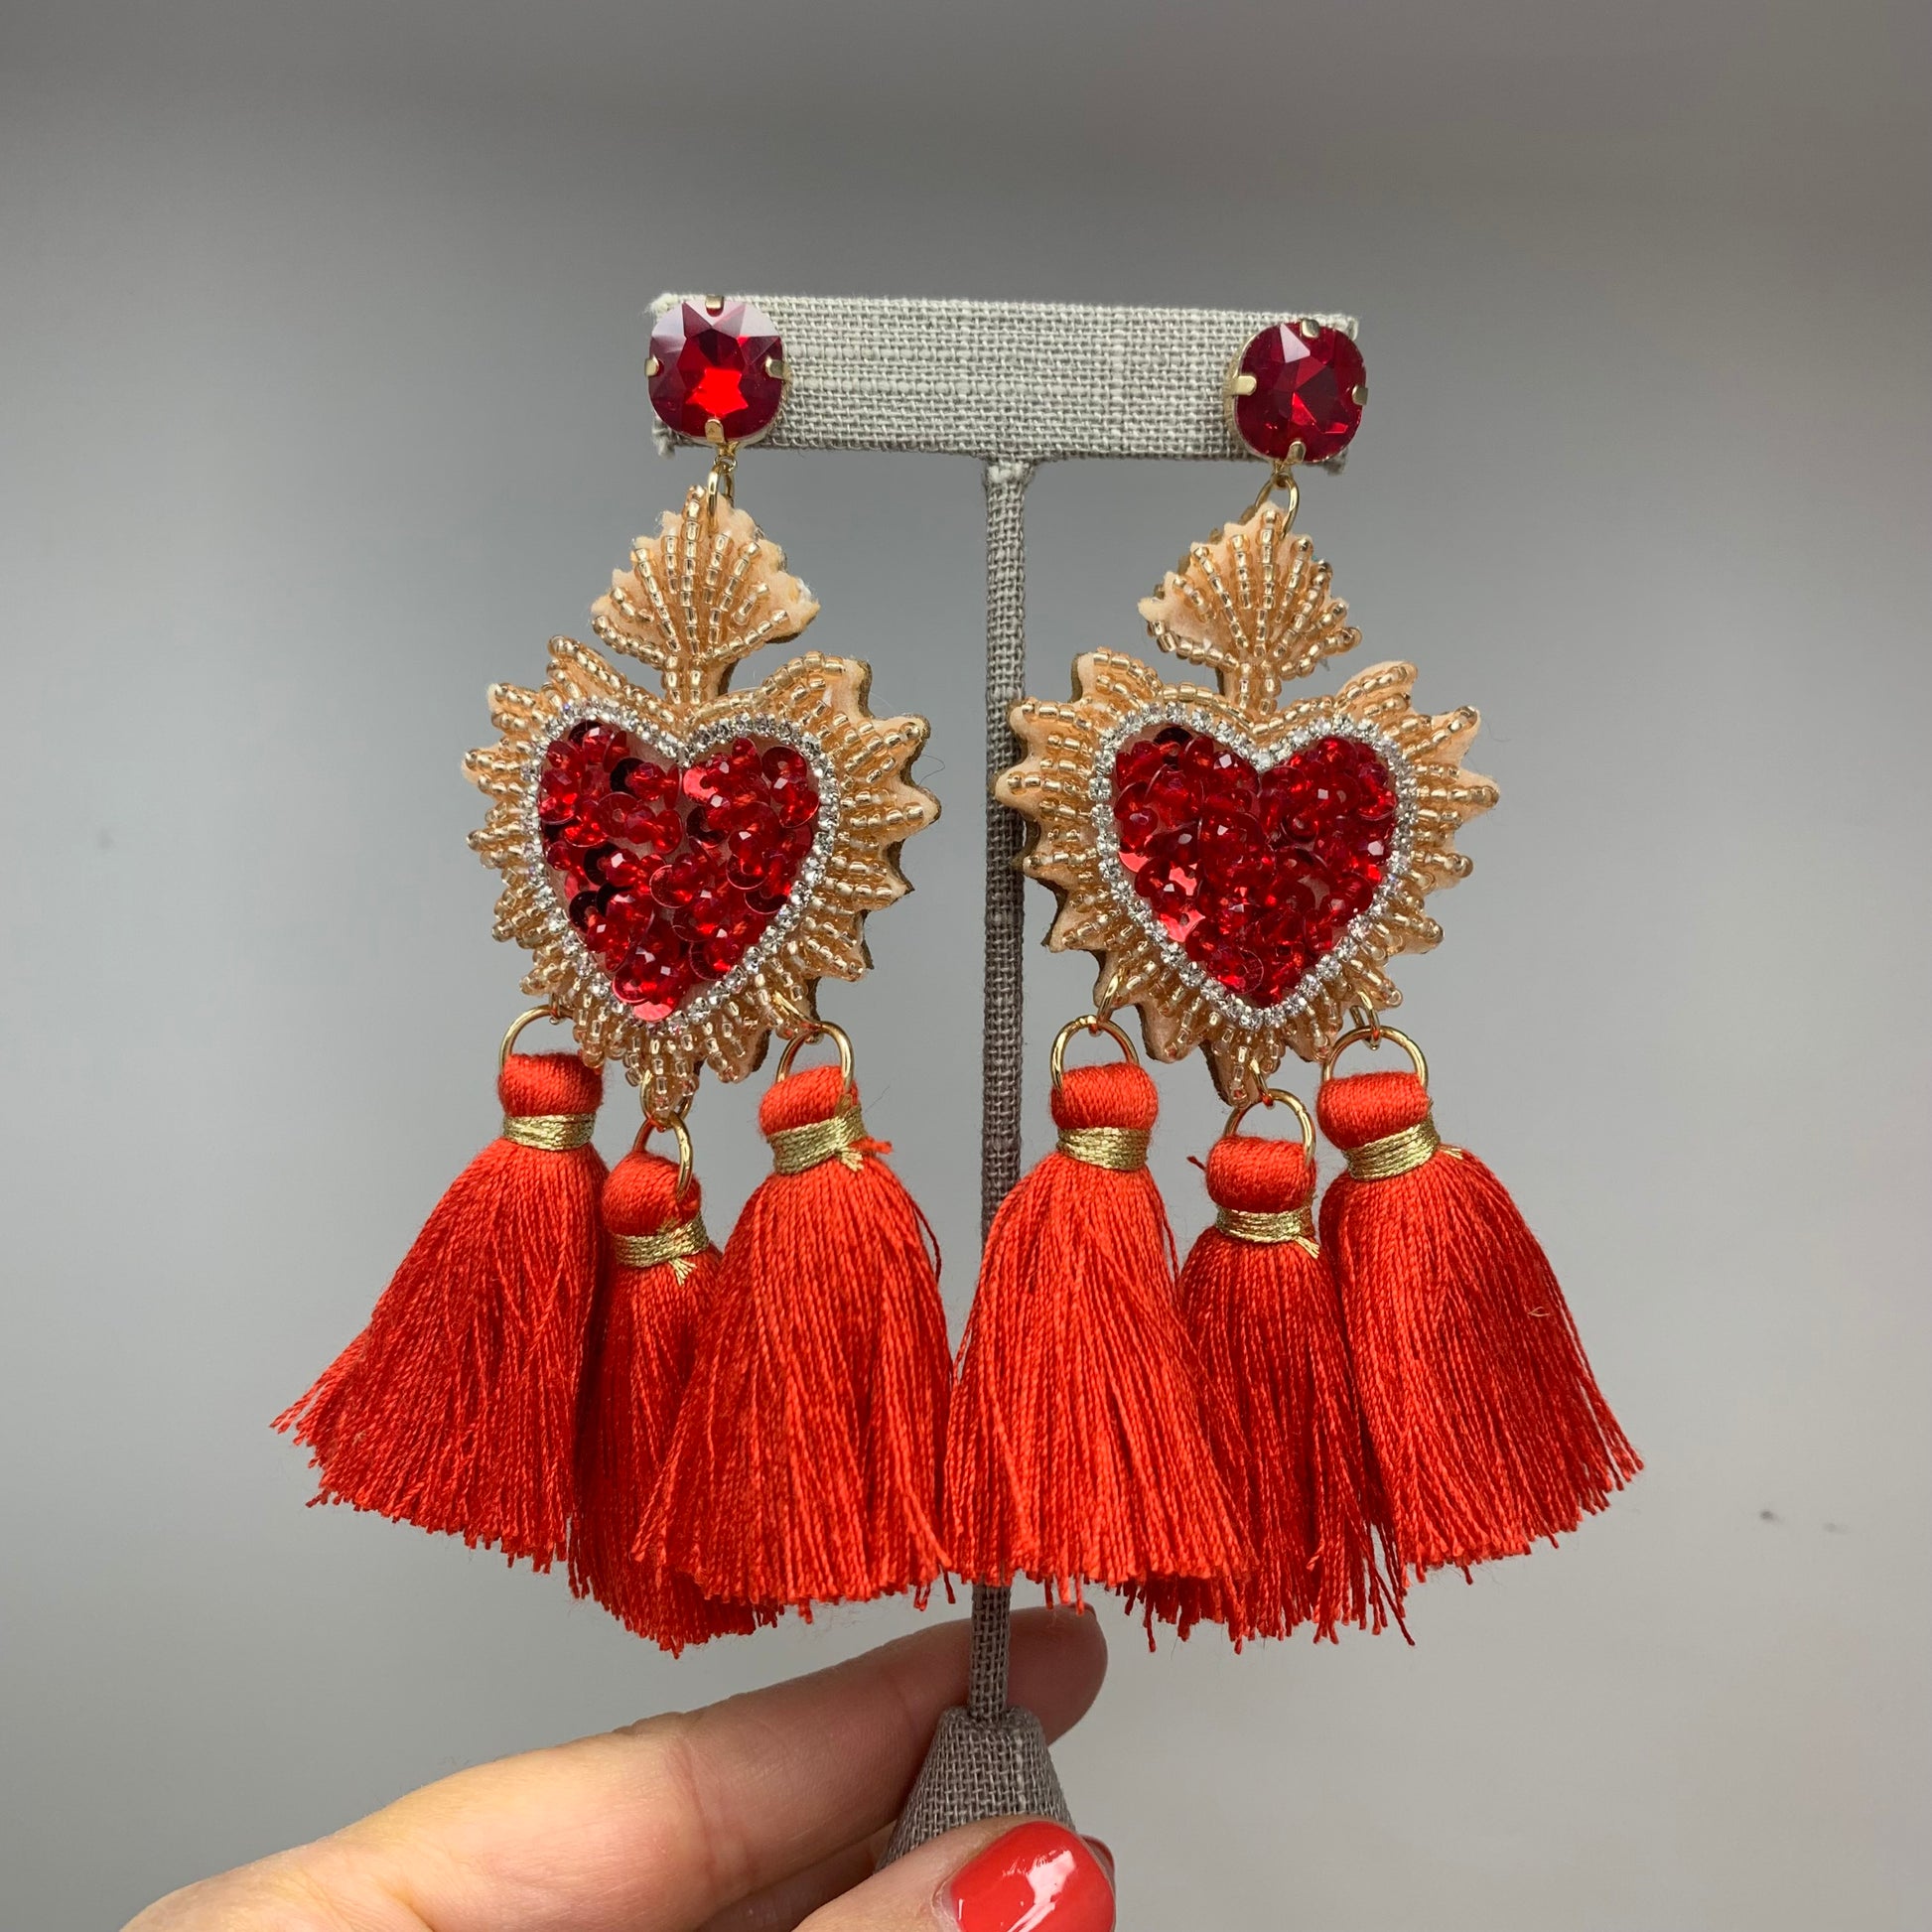 alternate view of red heart earrings